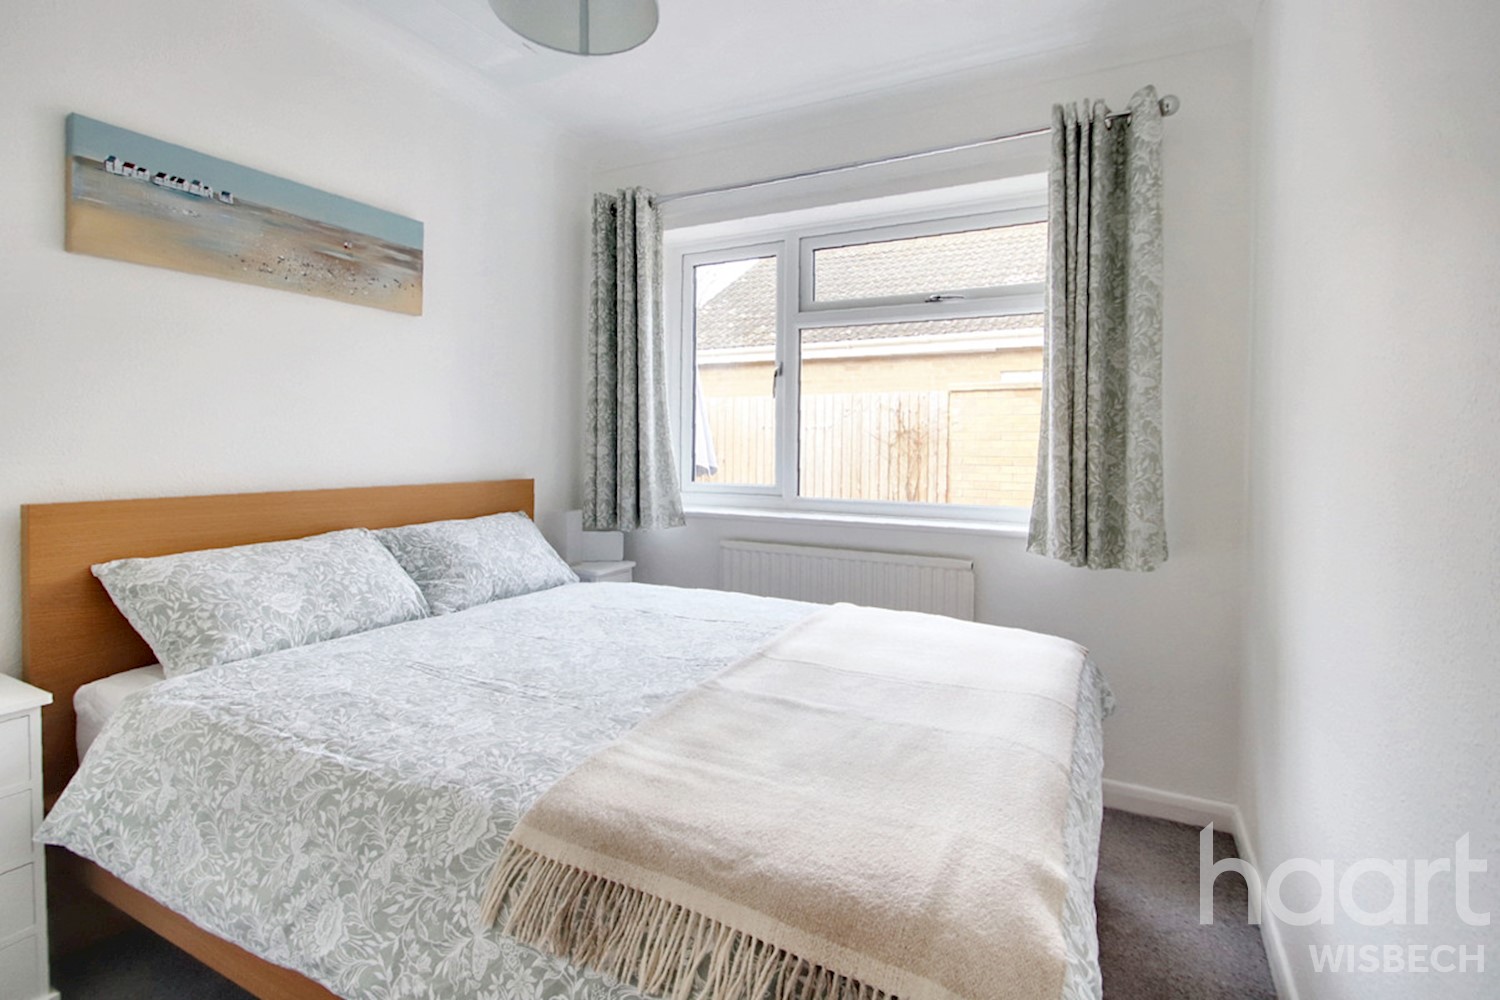 4 bedroom Bungalow | Church Way, Tydd St Mary | £350,000 | haart